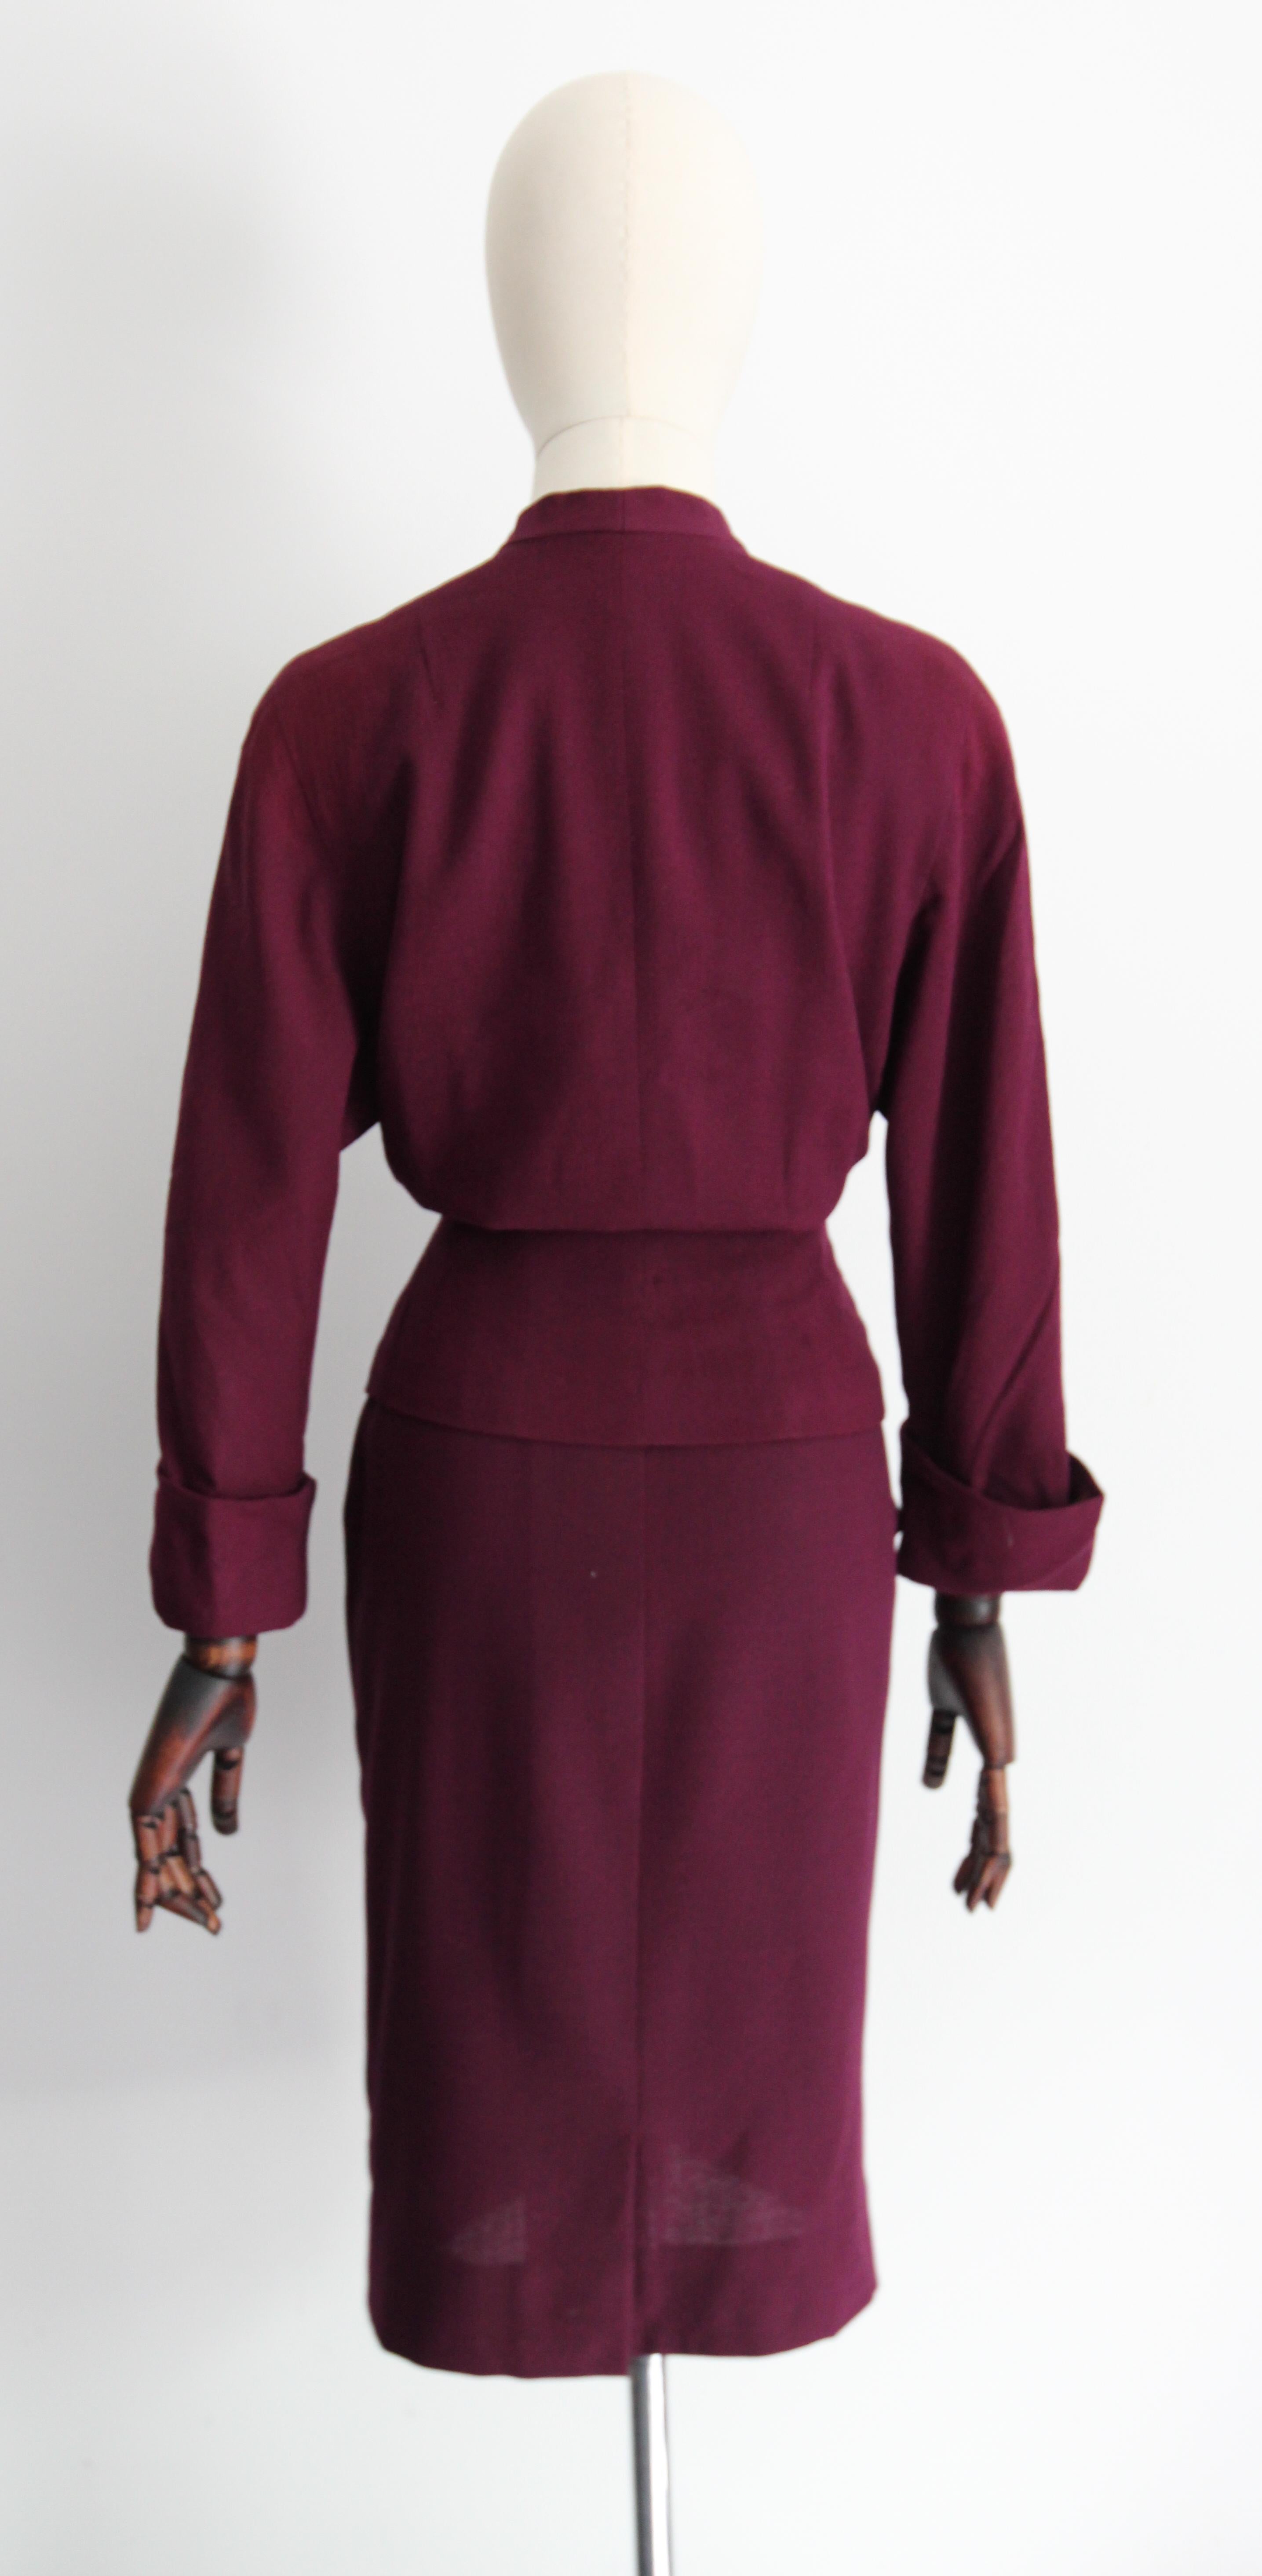 Vintage 1940's plum wool crepe skirt suit tailored burgundy suit UK 8-10 US 4-6 For Sale 4